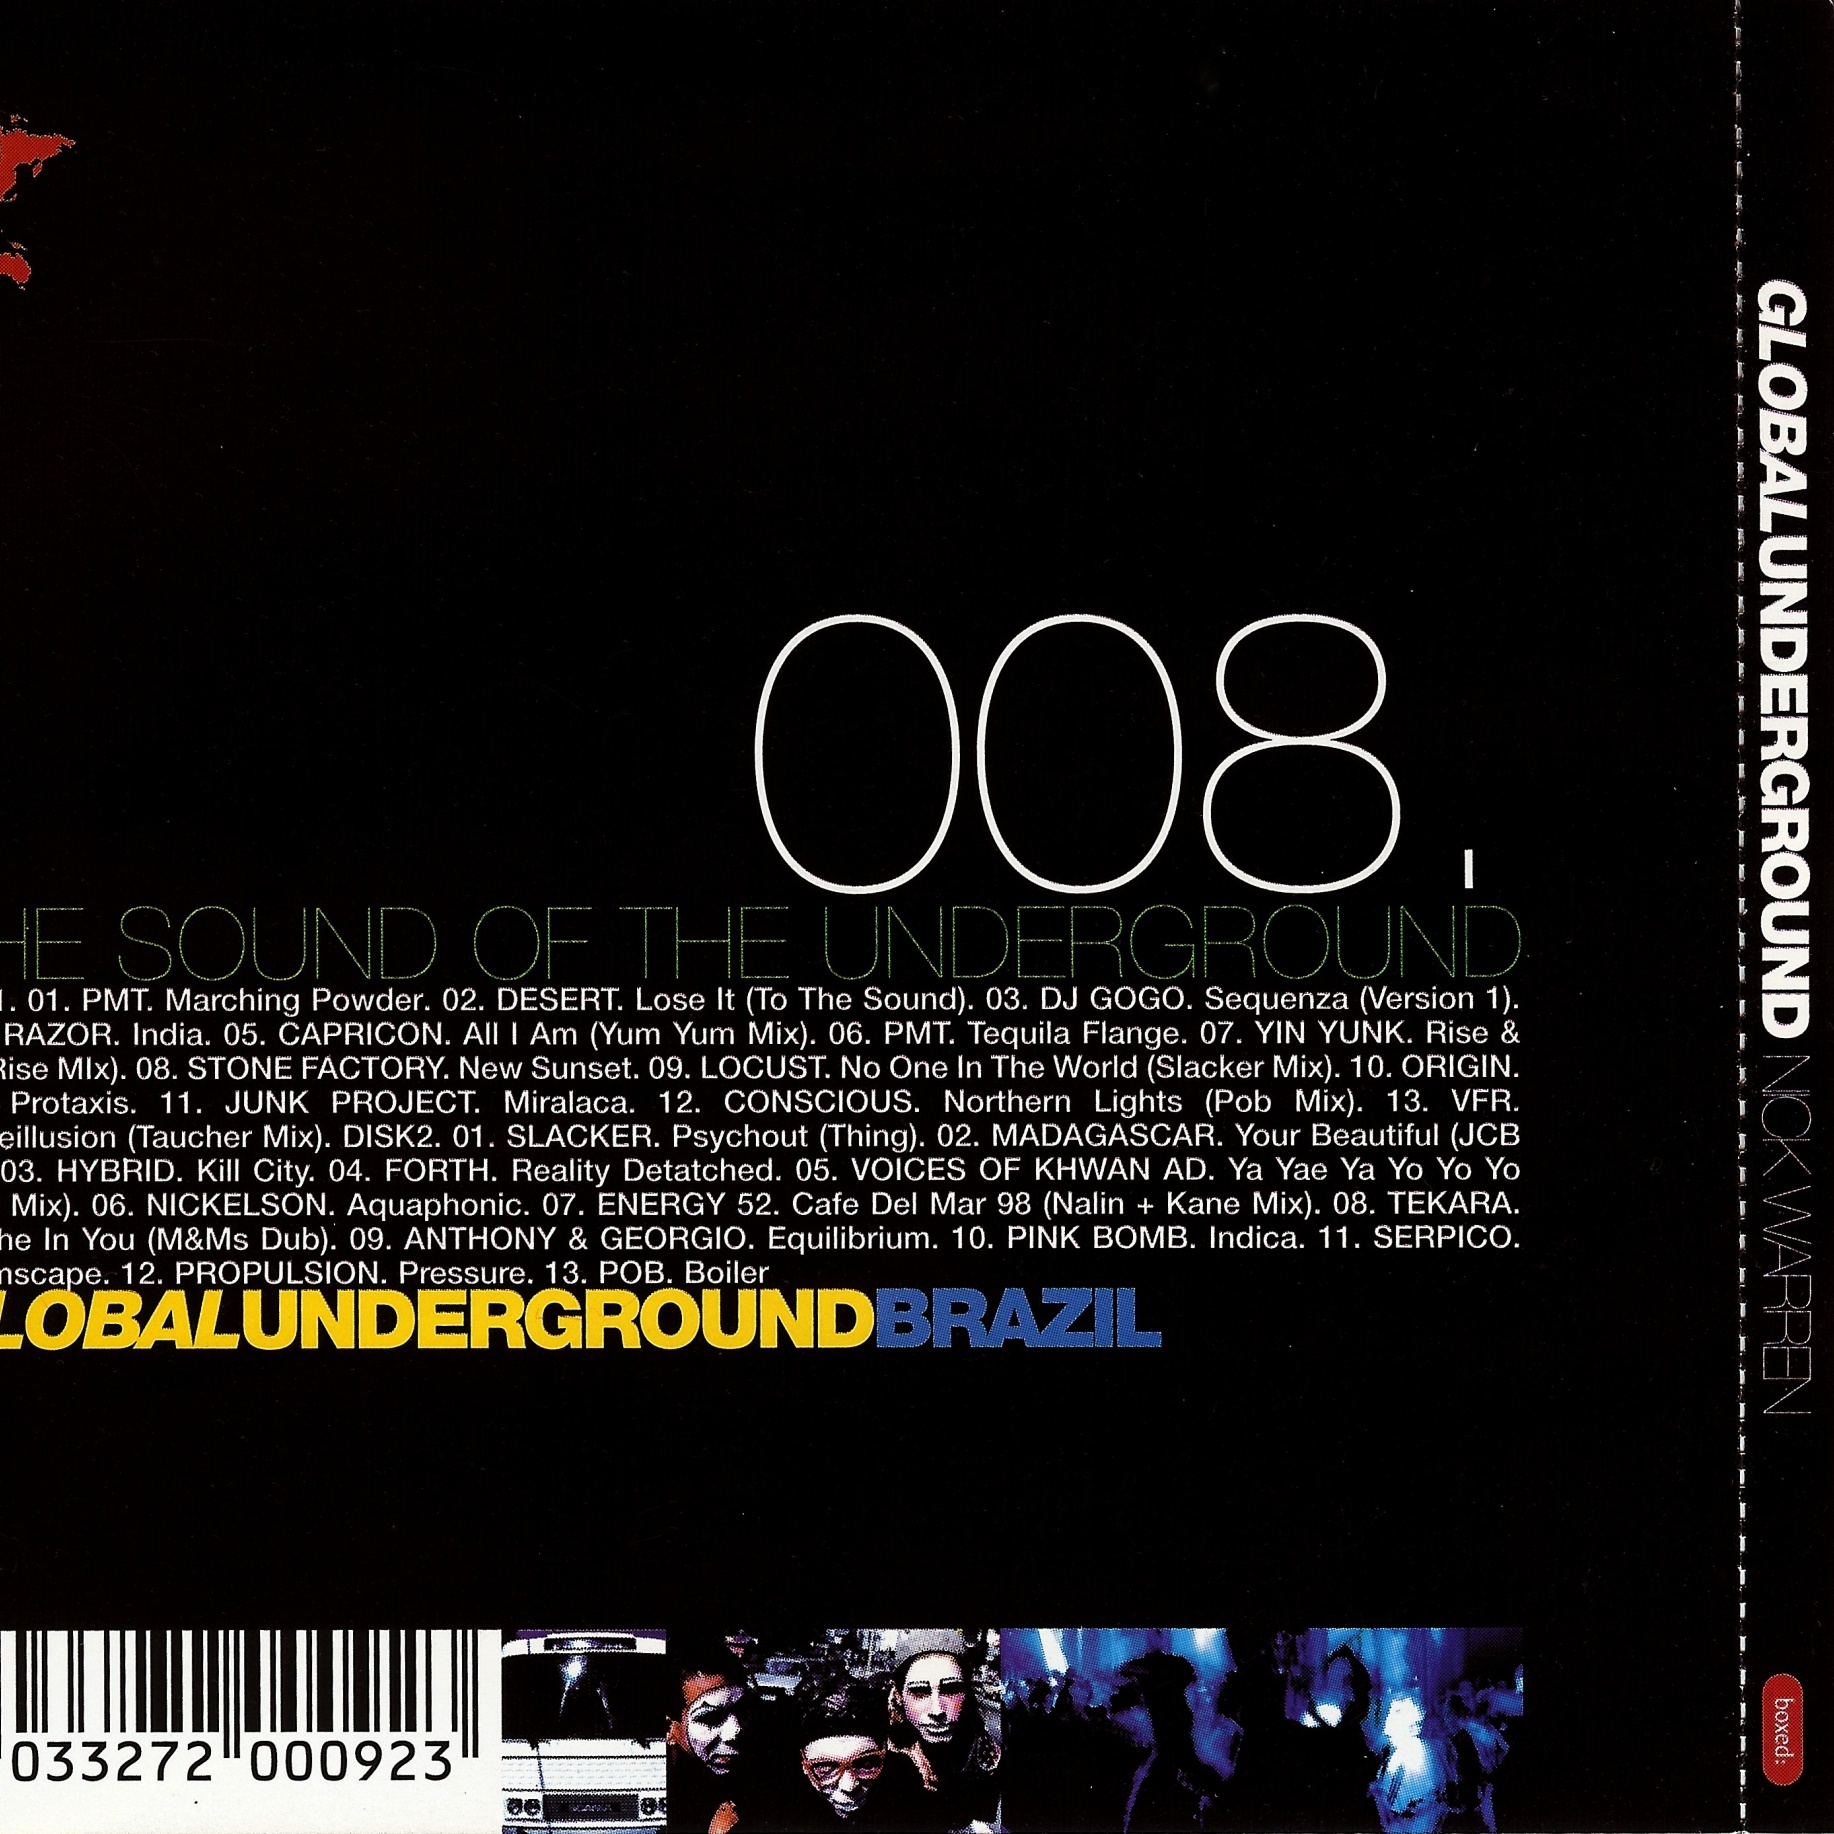 Global Underground: 008 Brazil